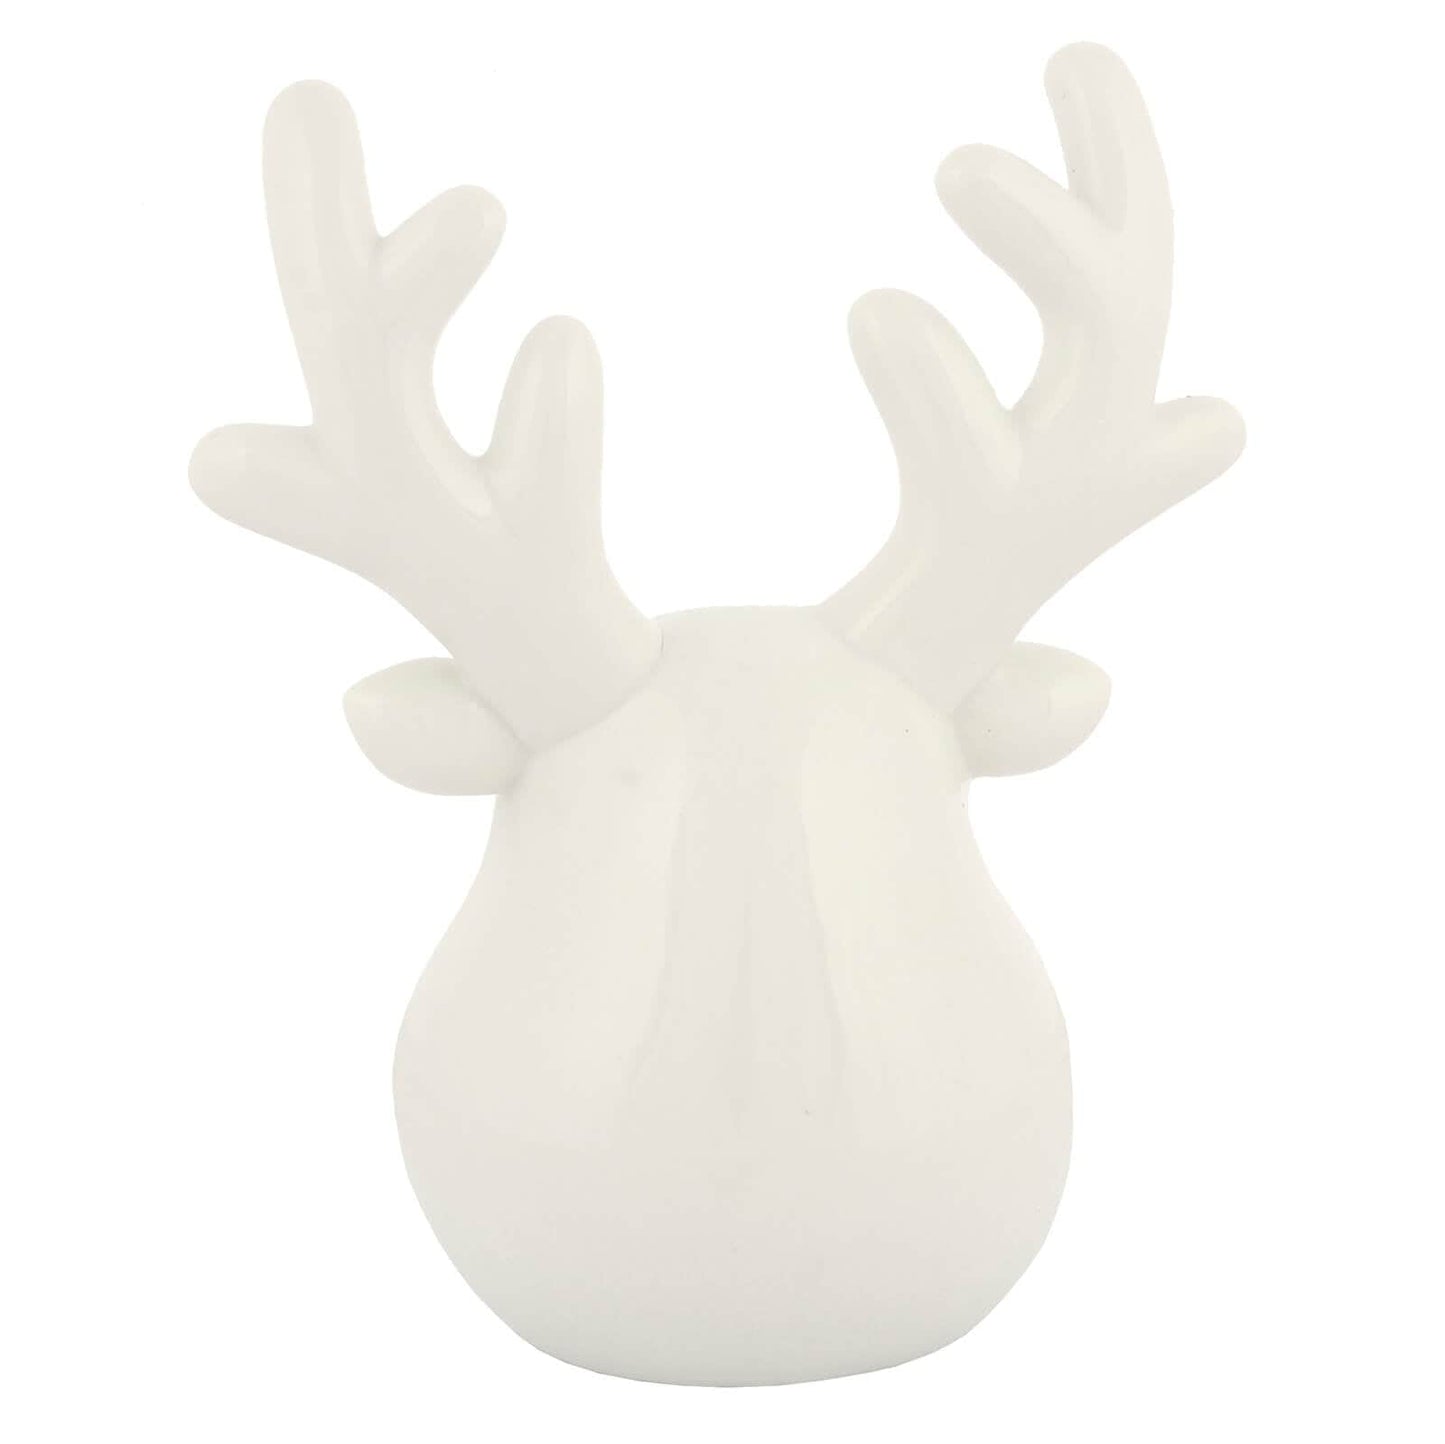 Mr Crimbo Reindeer Head Christmas Ornament White Silver 20cm